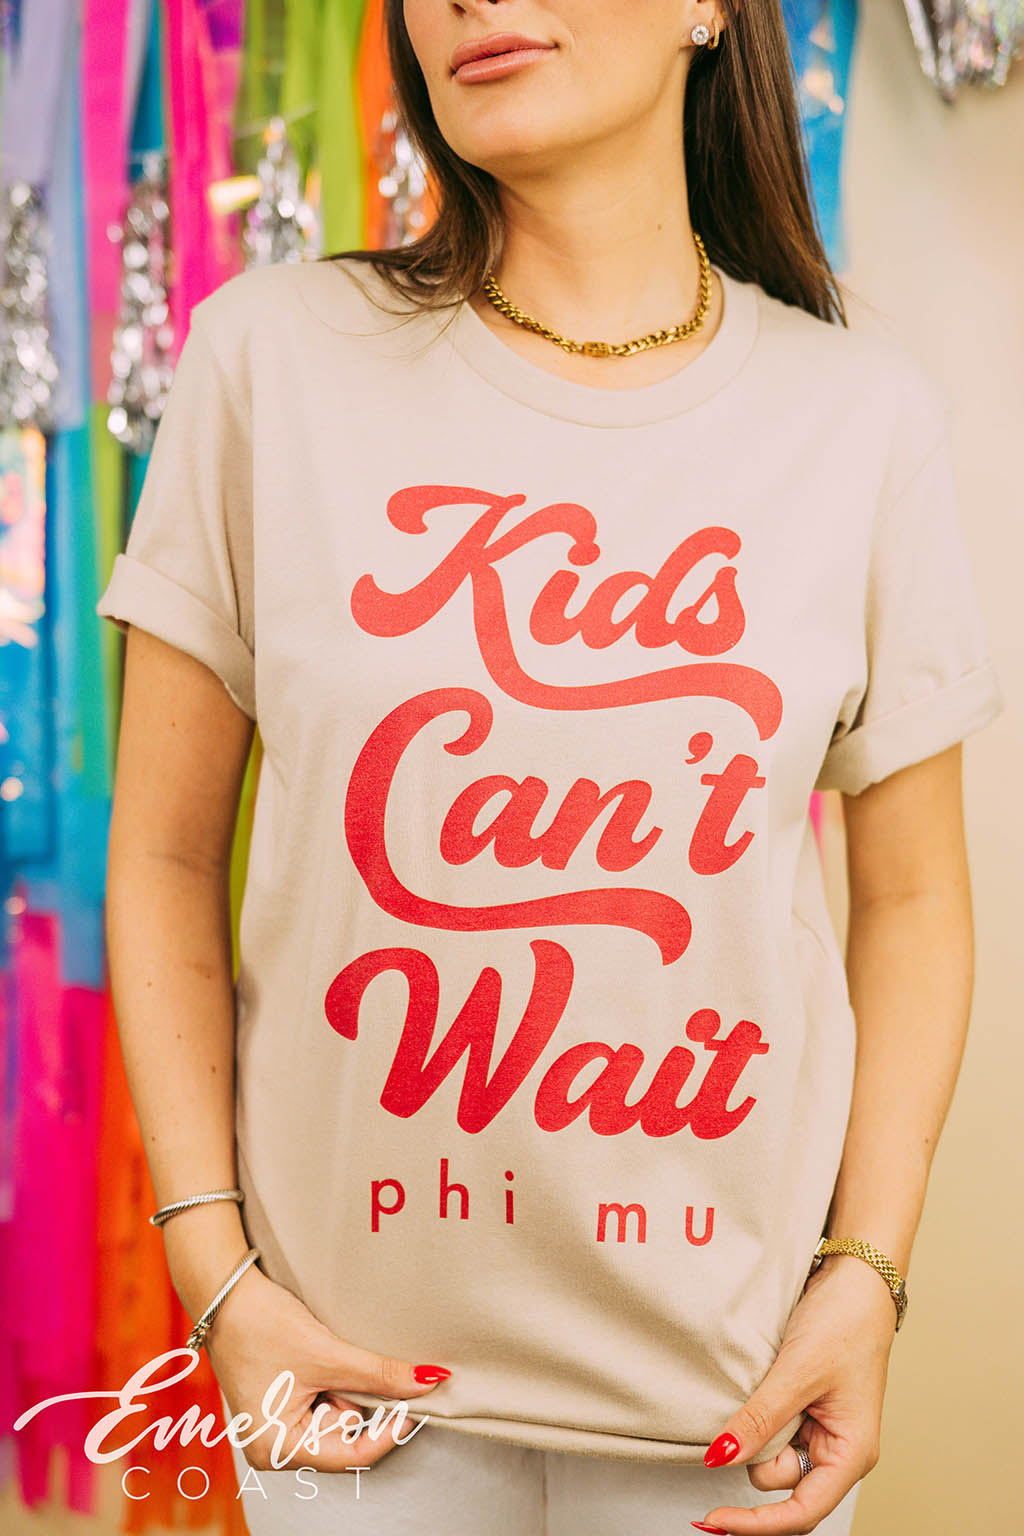 Phi Mu Kids Can&#39;t Wait Tshirt